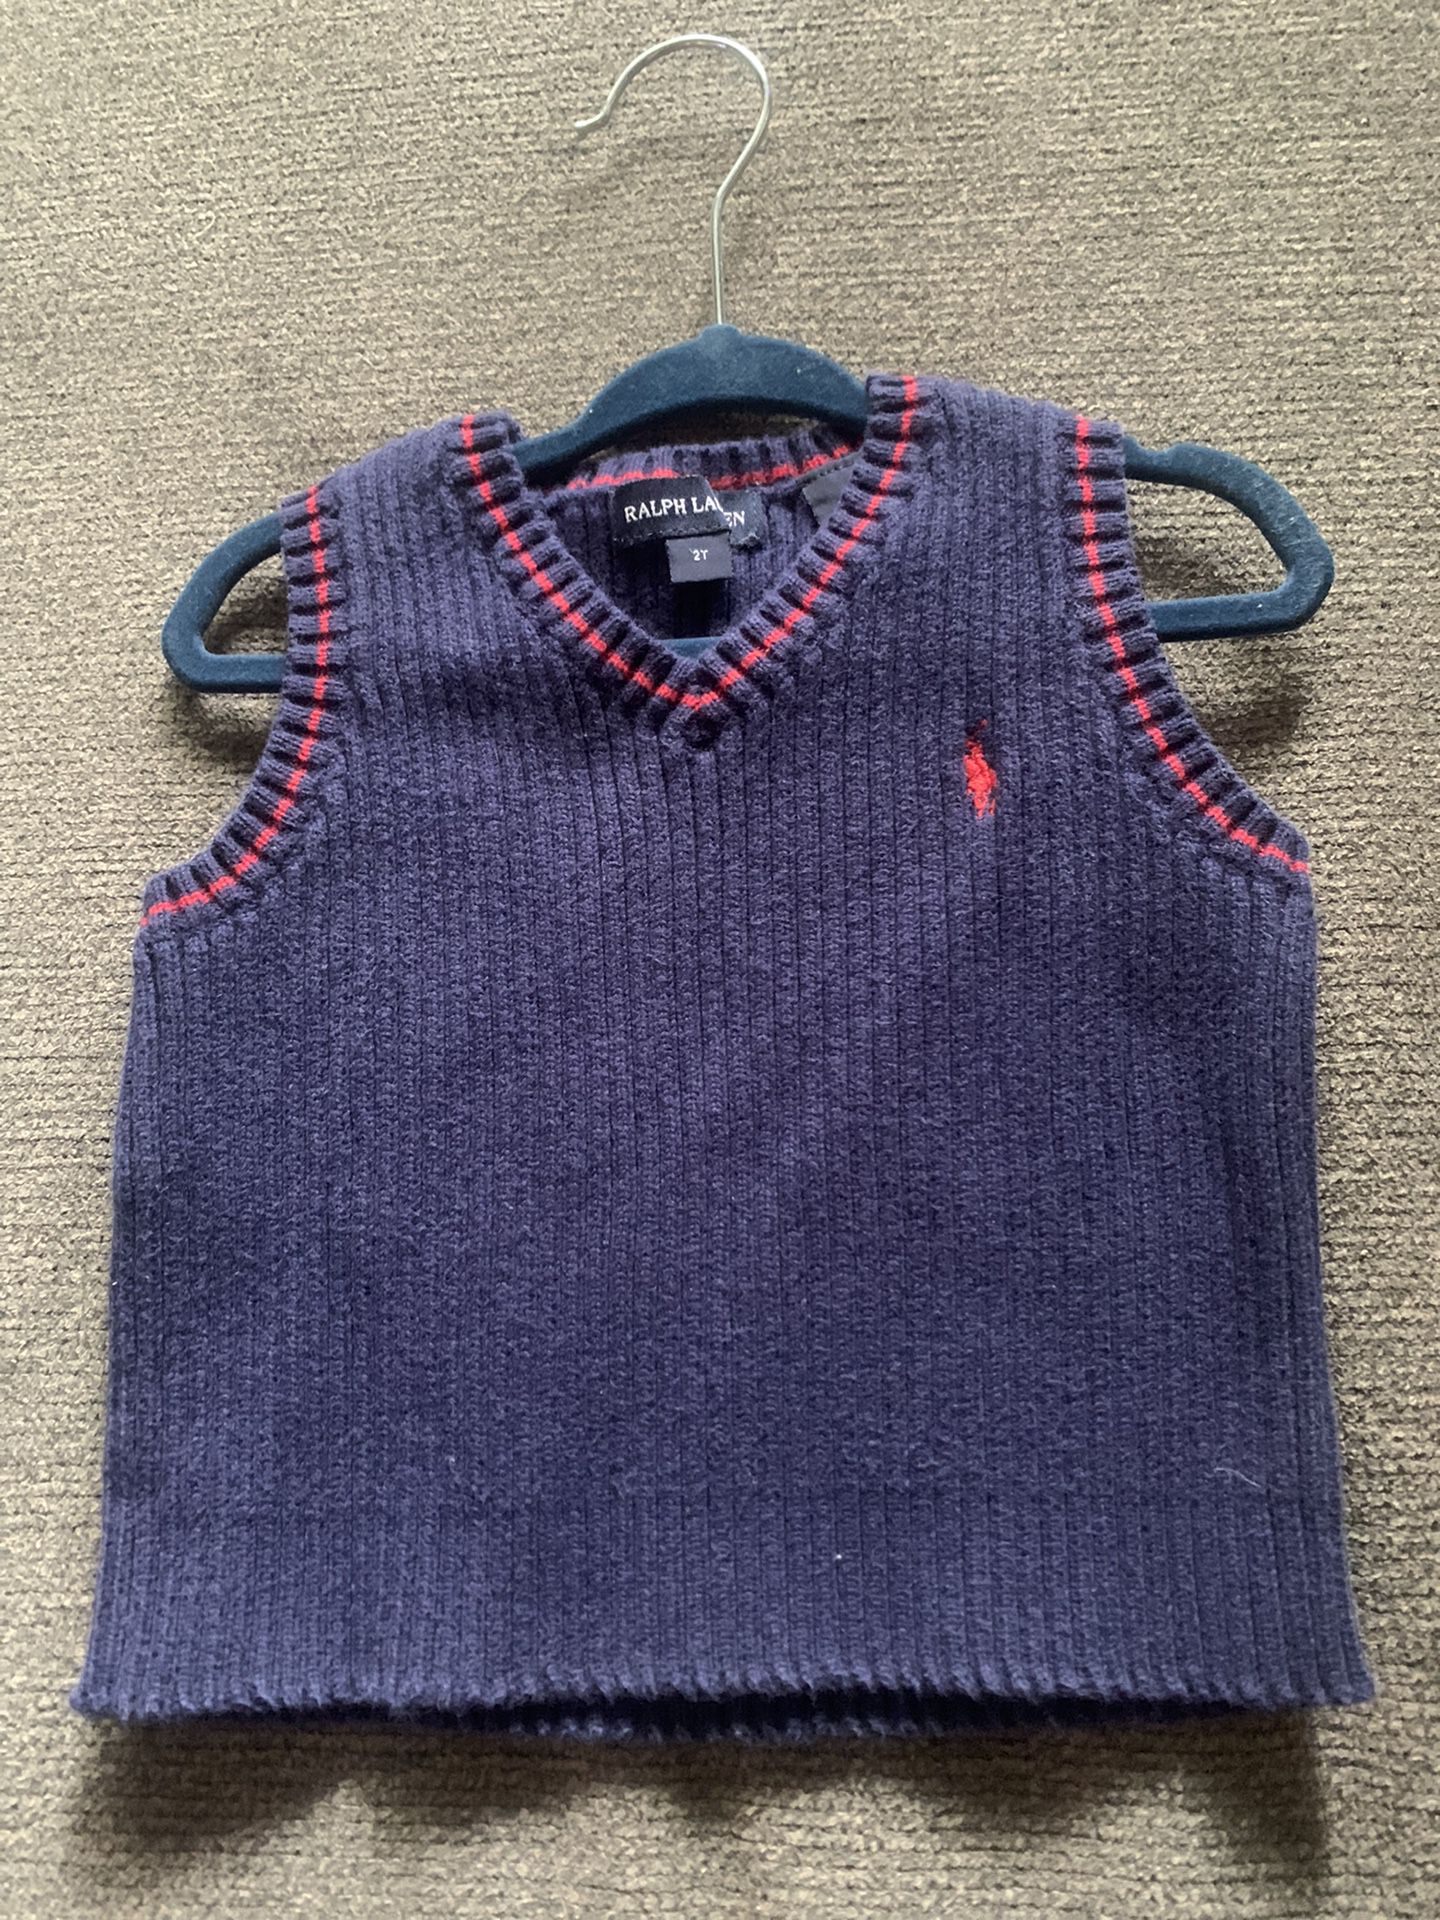 Ralph Lauren Polo Sweater / Toddler 2T